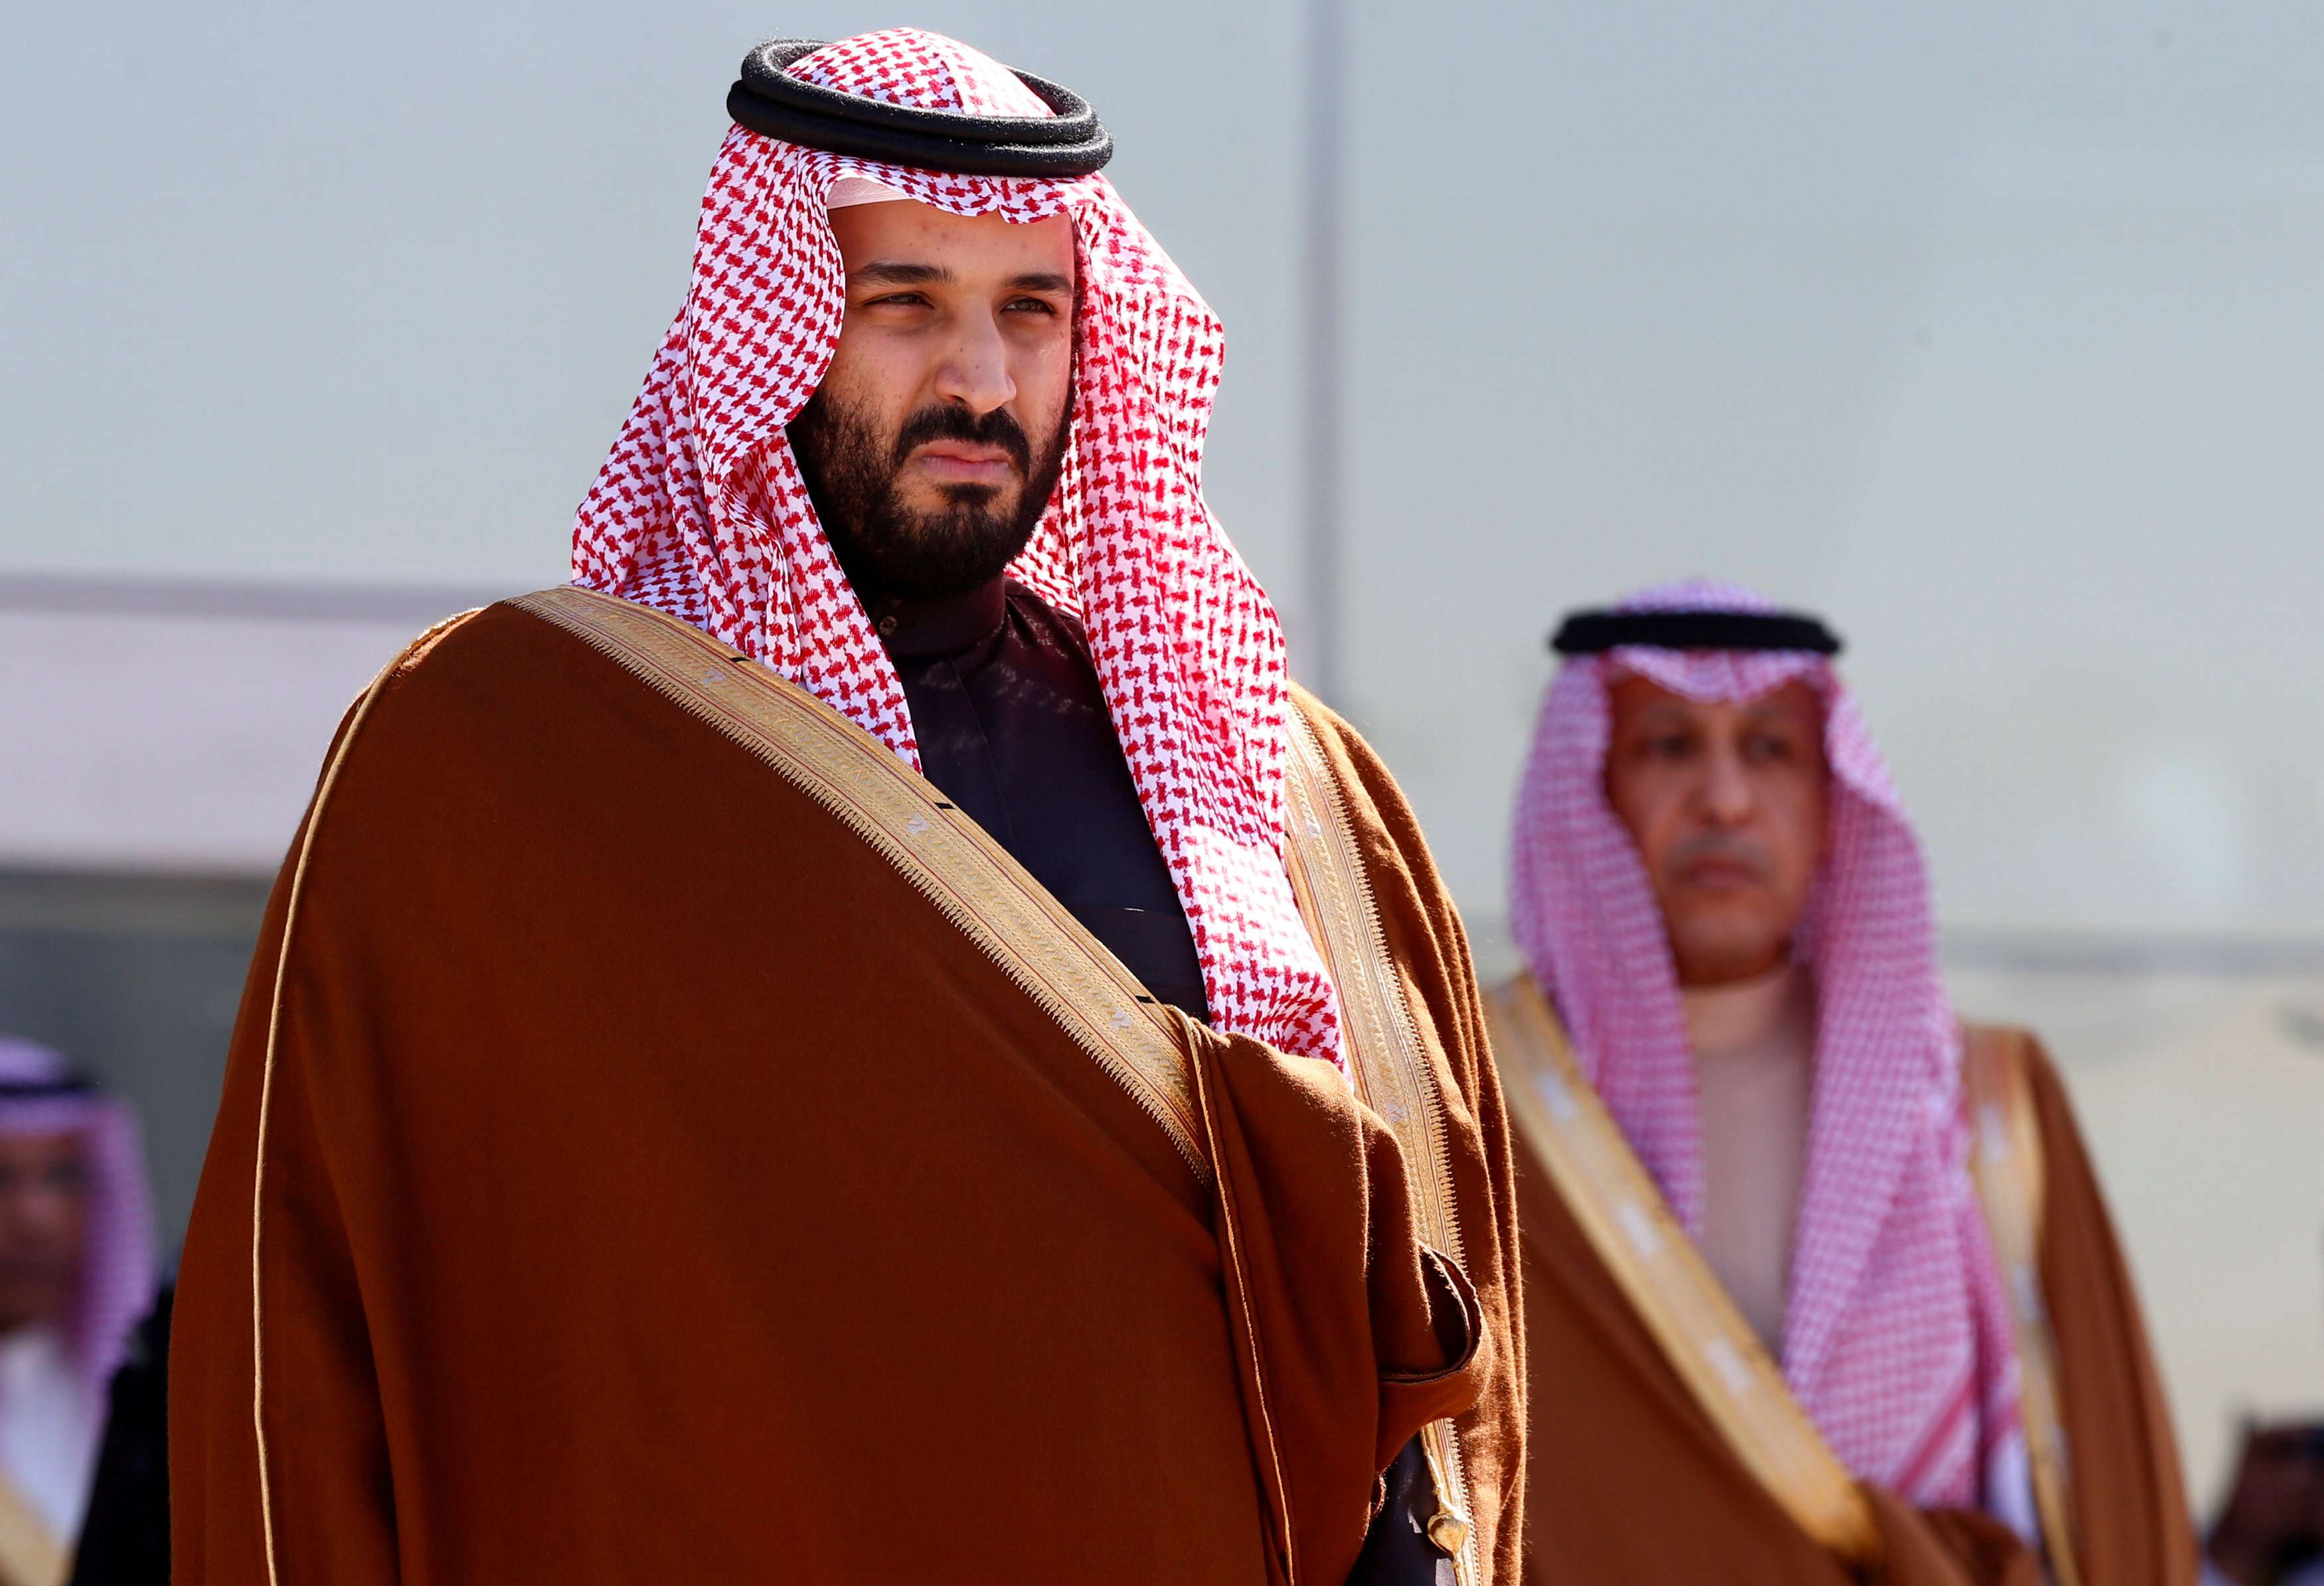 Crown Prince Mohammed bin Salman has said Saudi Arabia will develop nuclear arms if Iran does.